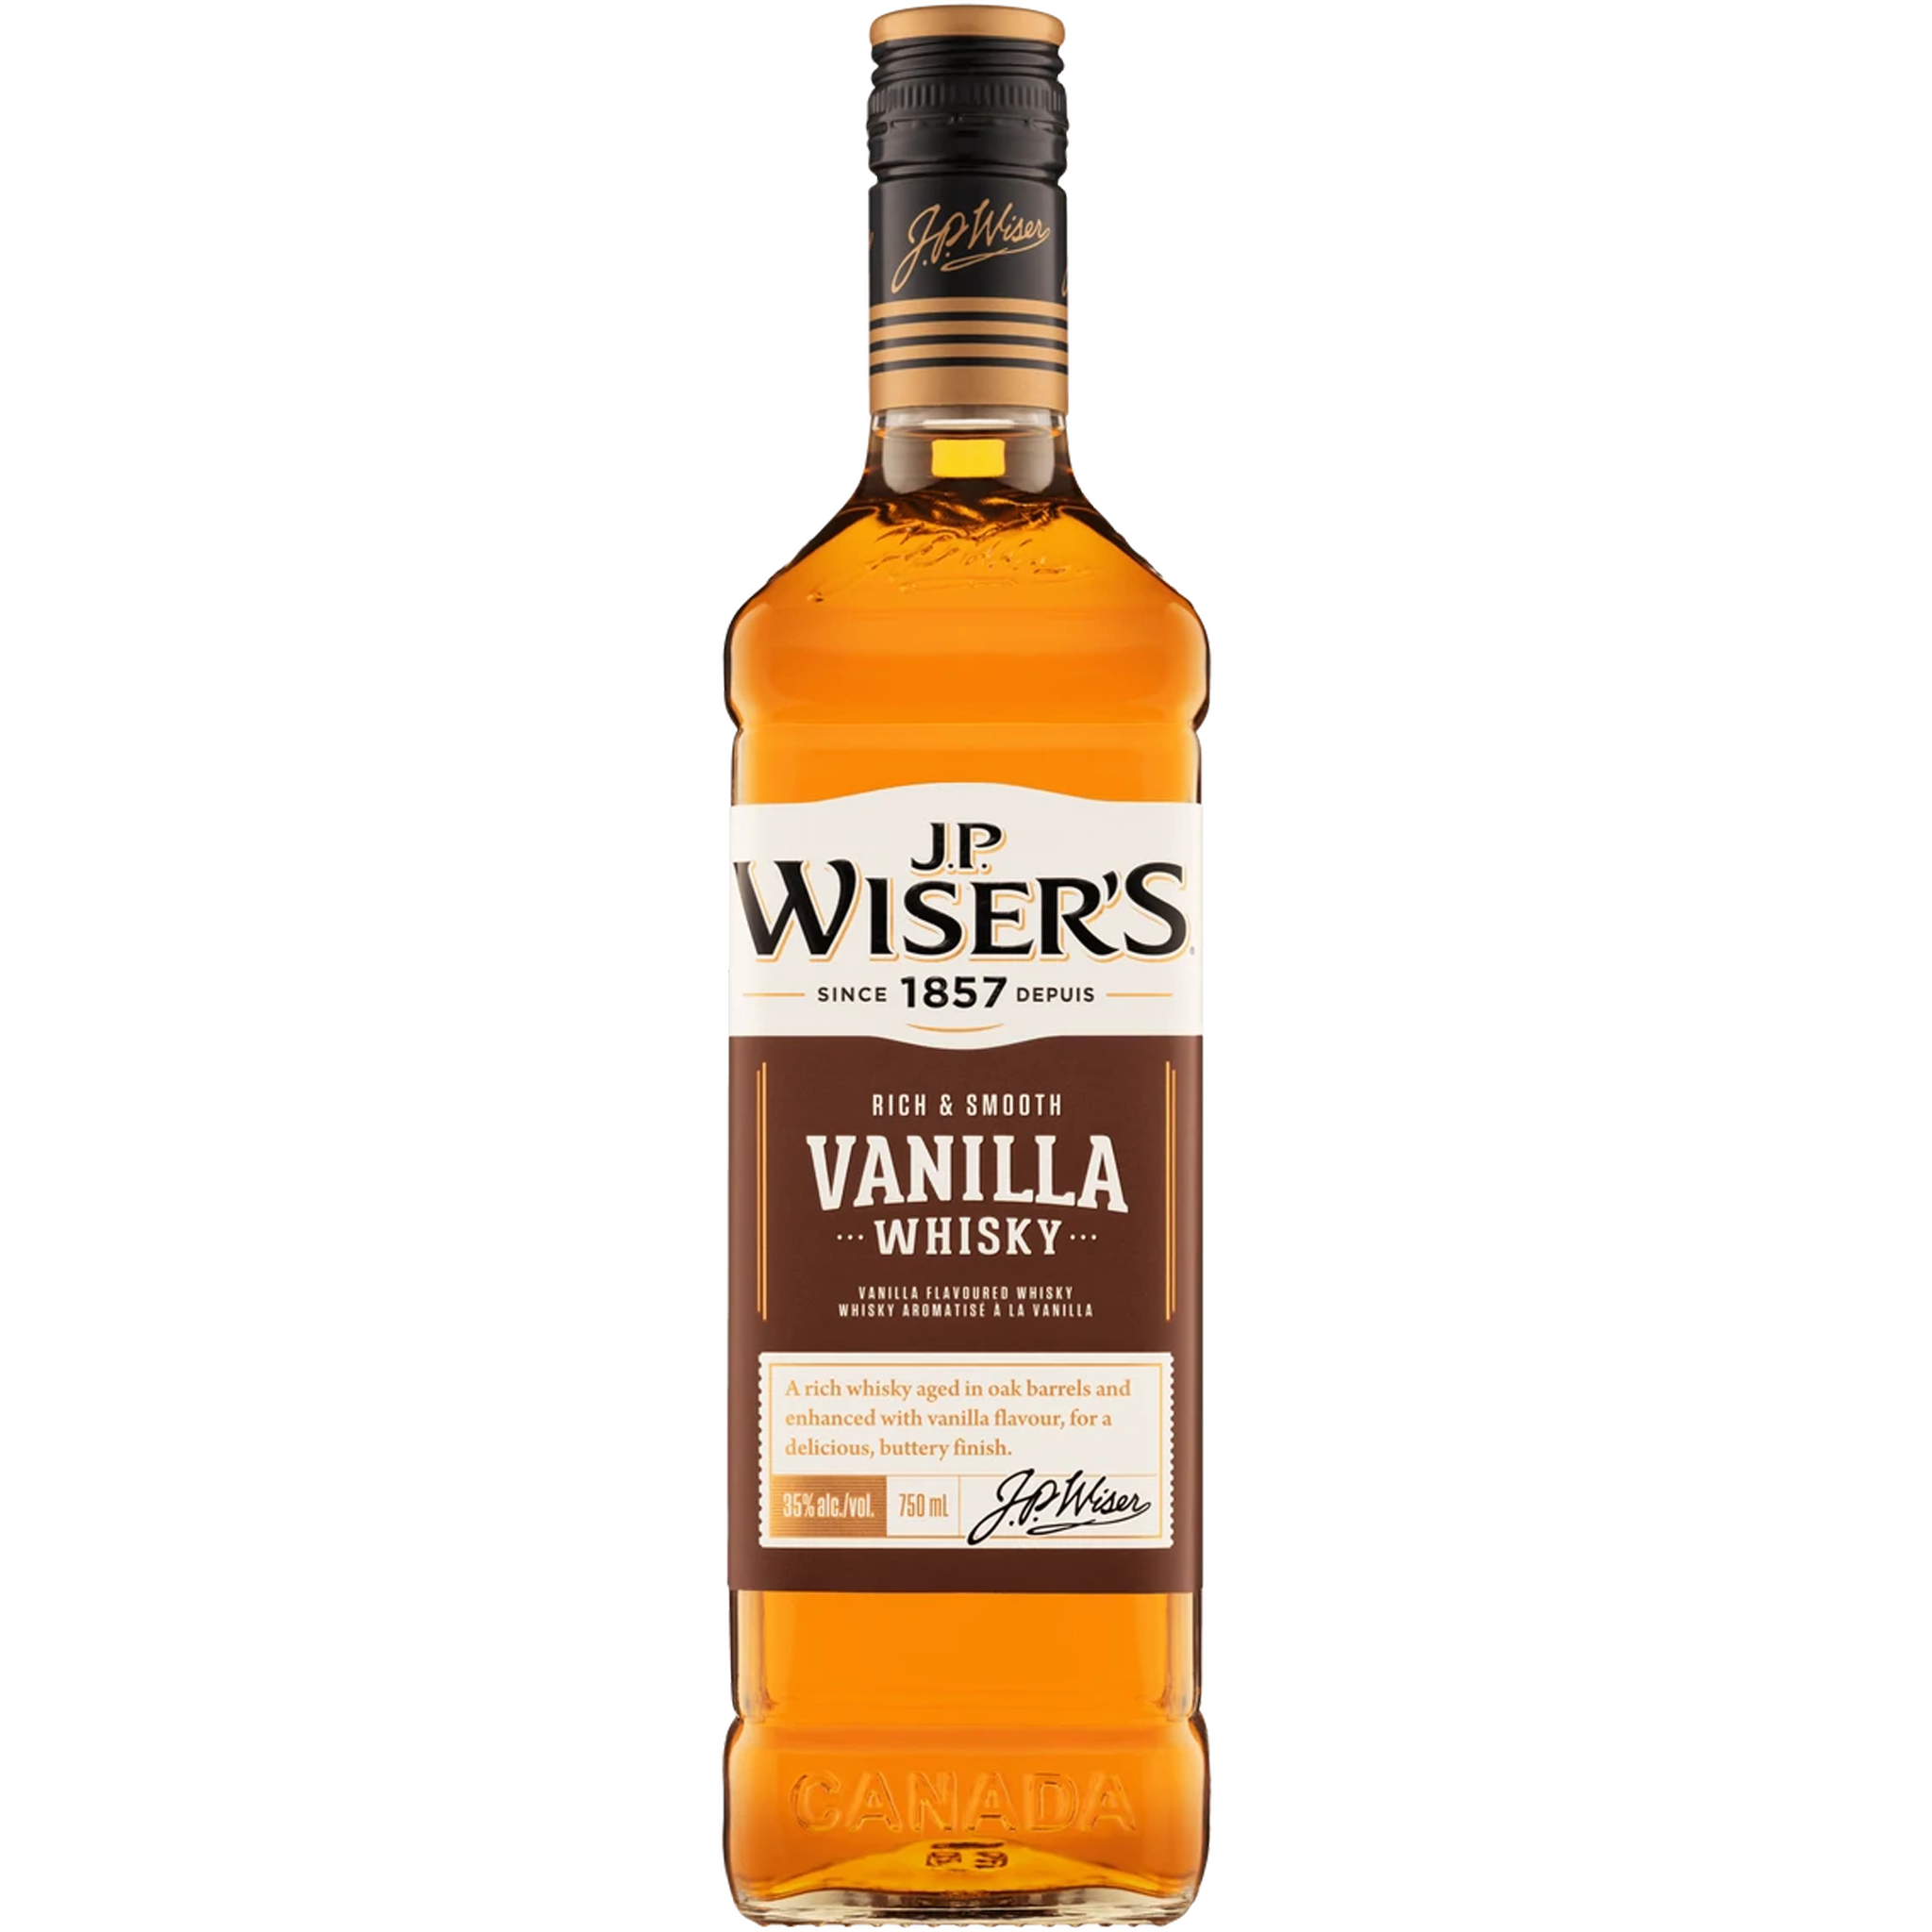 JP Wiser's Spiced Whisky Vanilla